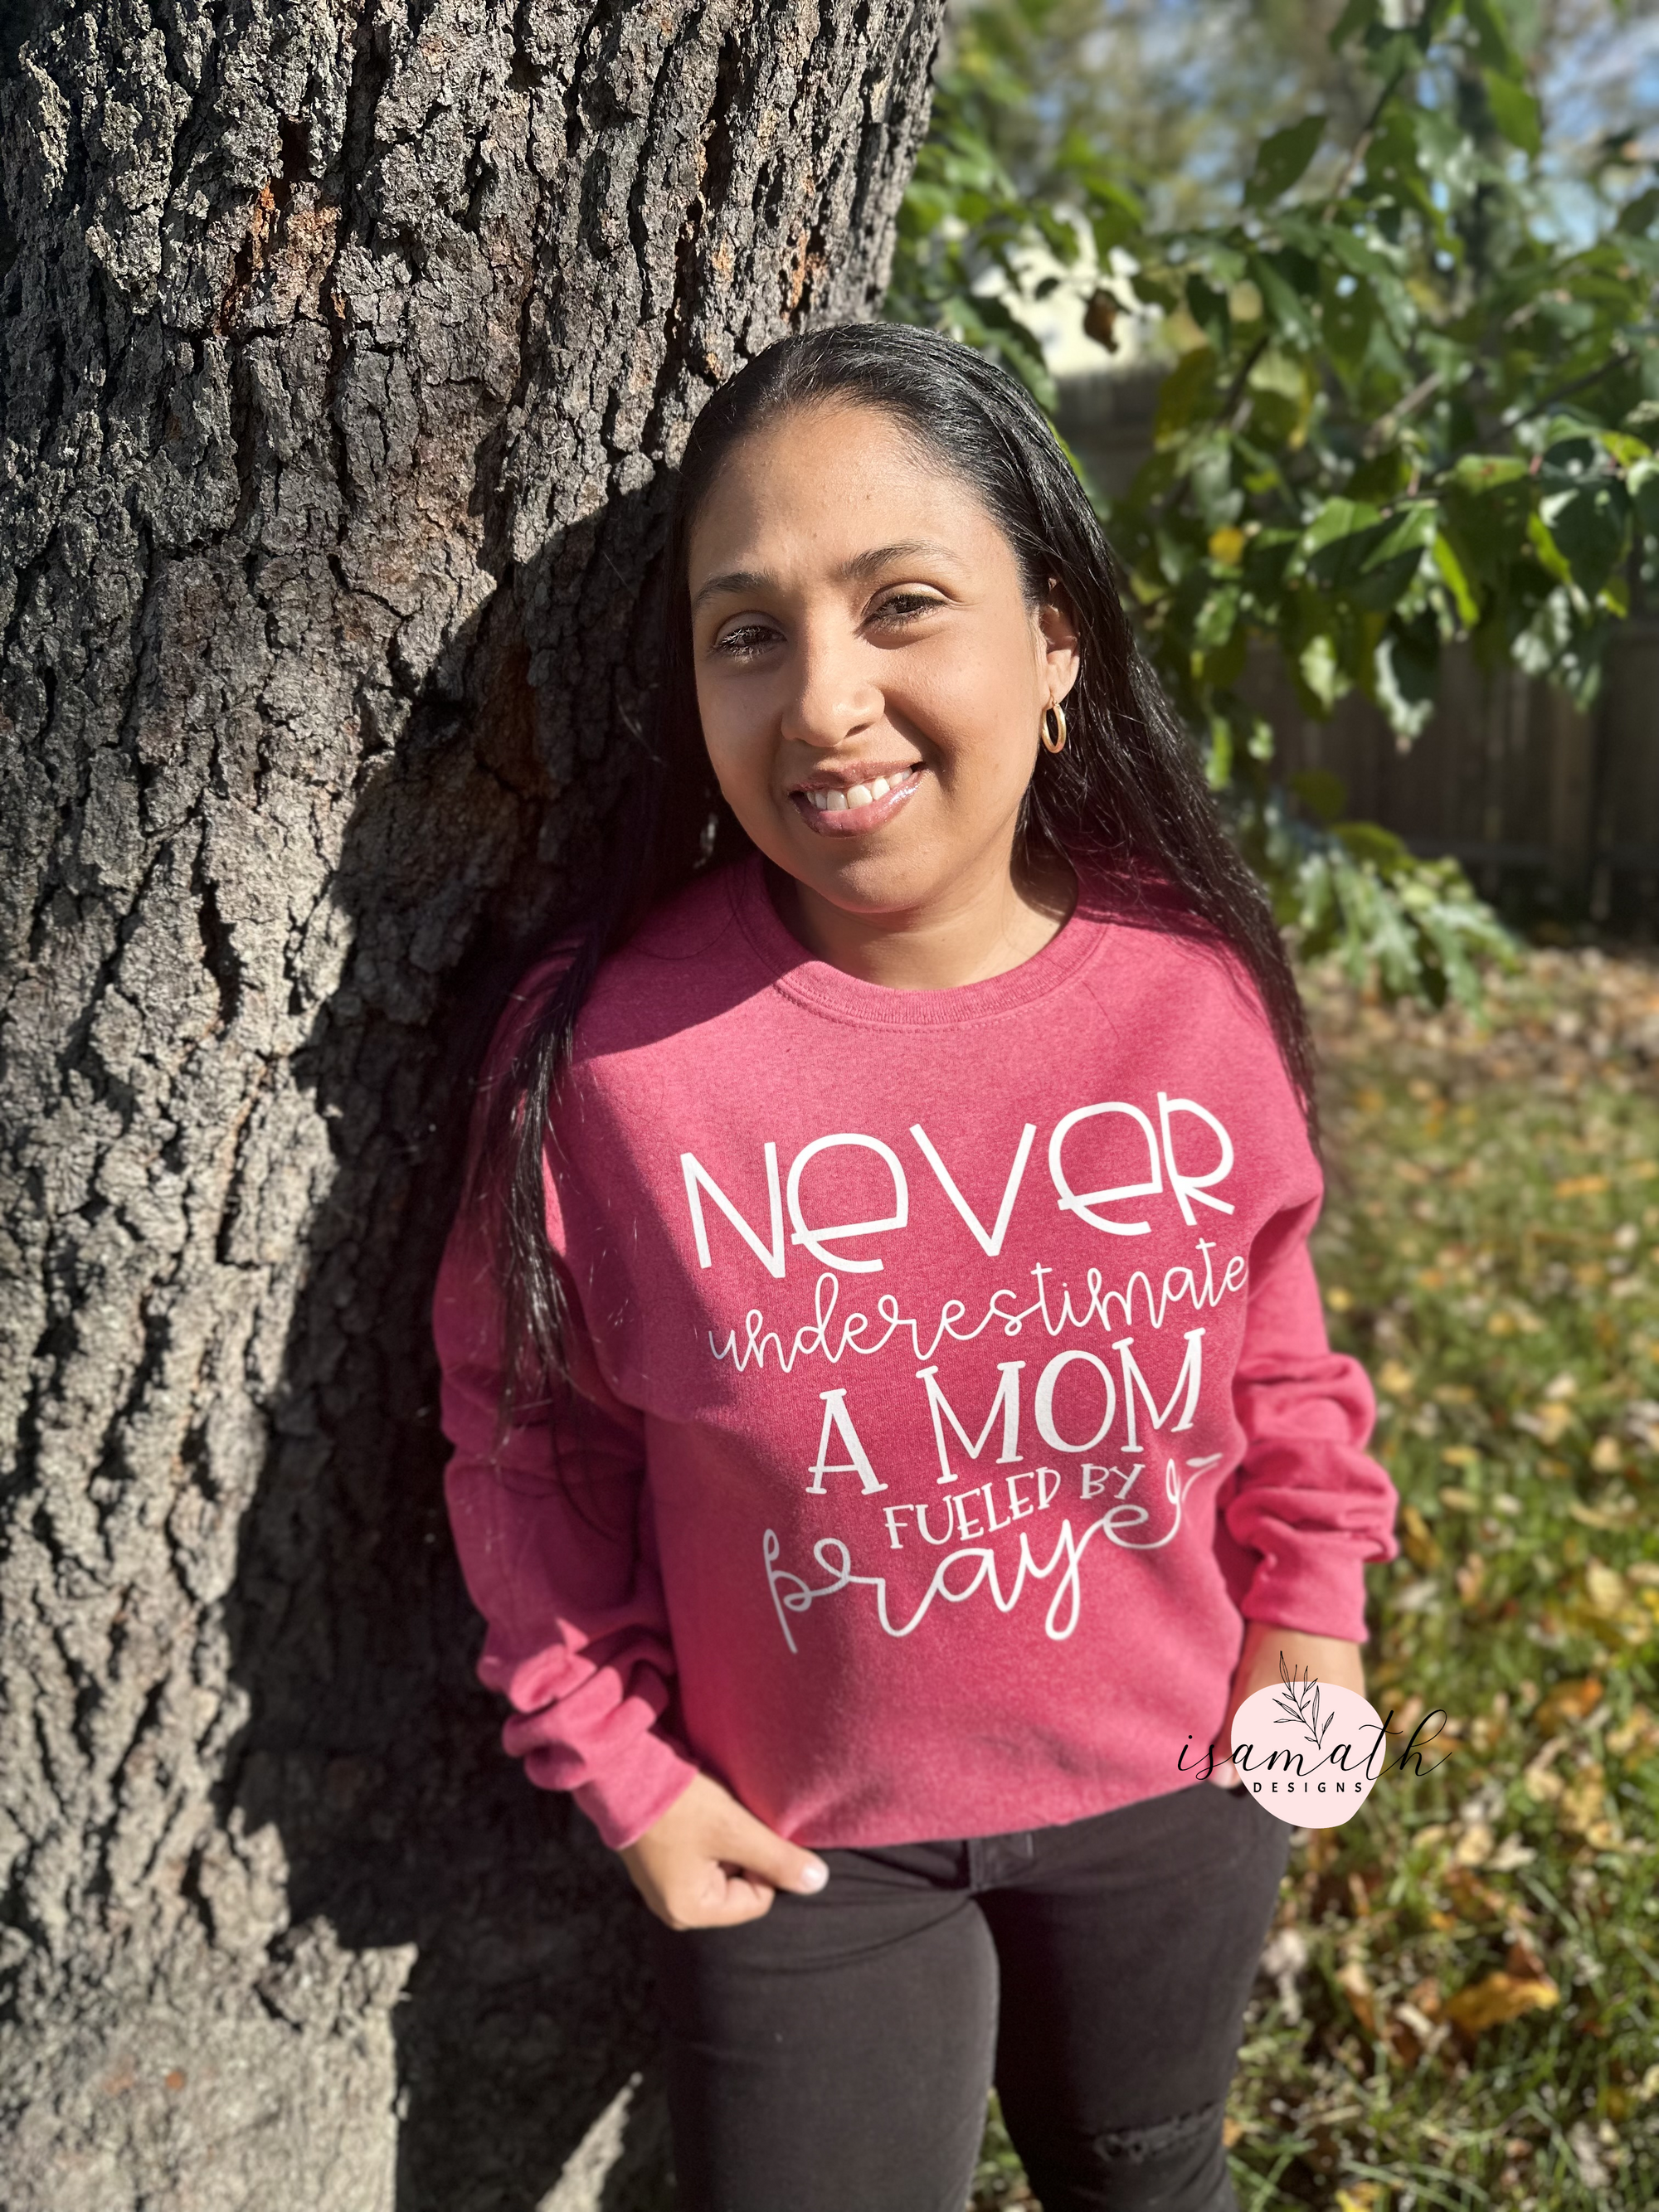 Never underestimate a mom fueled by prayer - sweatshirt